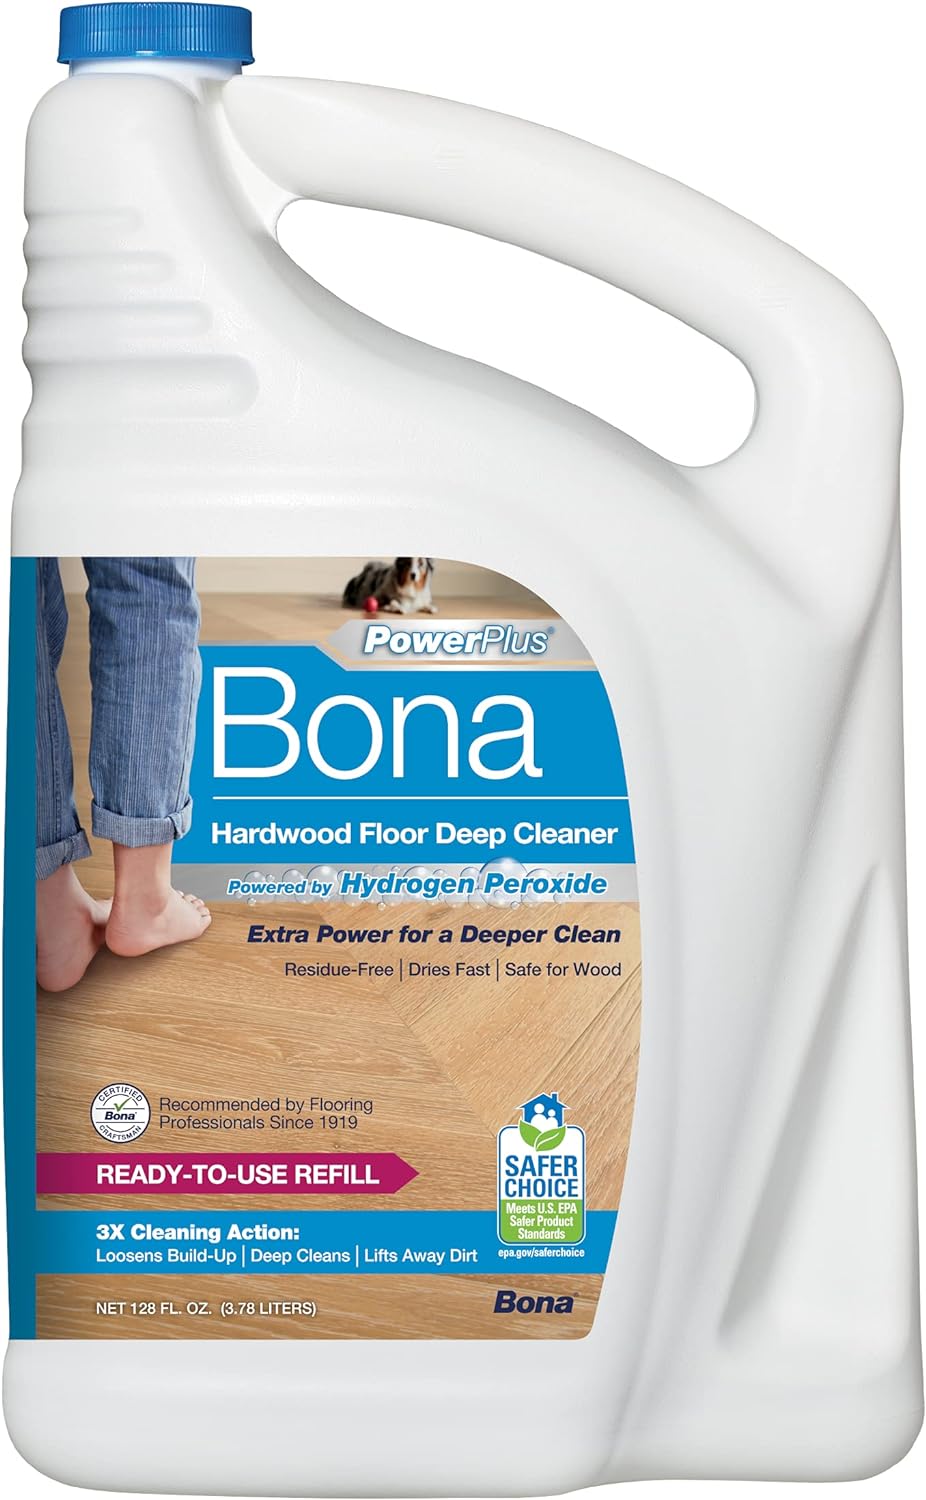 Bona PowerPlus Hardwood Floor Deep Cleaner Refill - 128 fl oz - Refill for Bona Spray Mops and Spray Bottles - Residue-Free Floor Cleaning Solution for Wood Floors